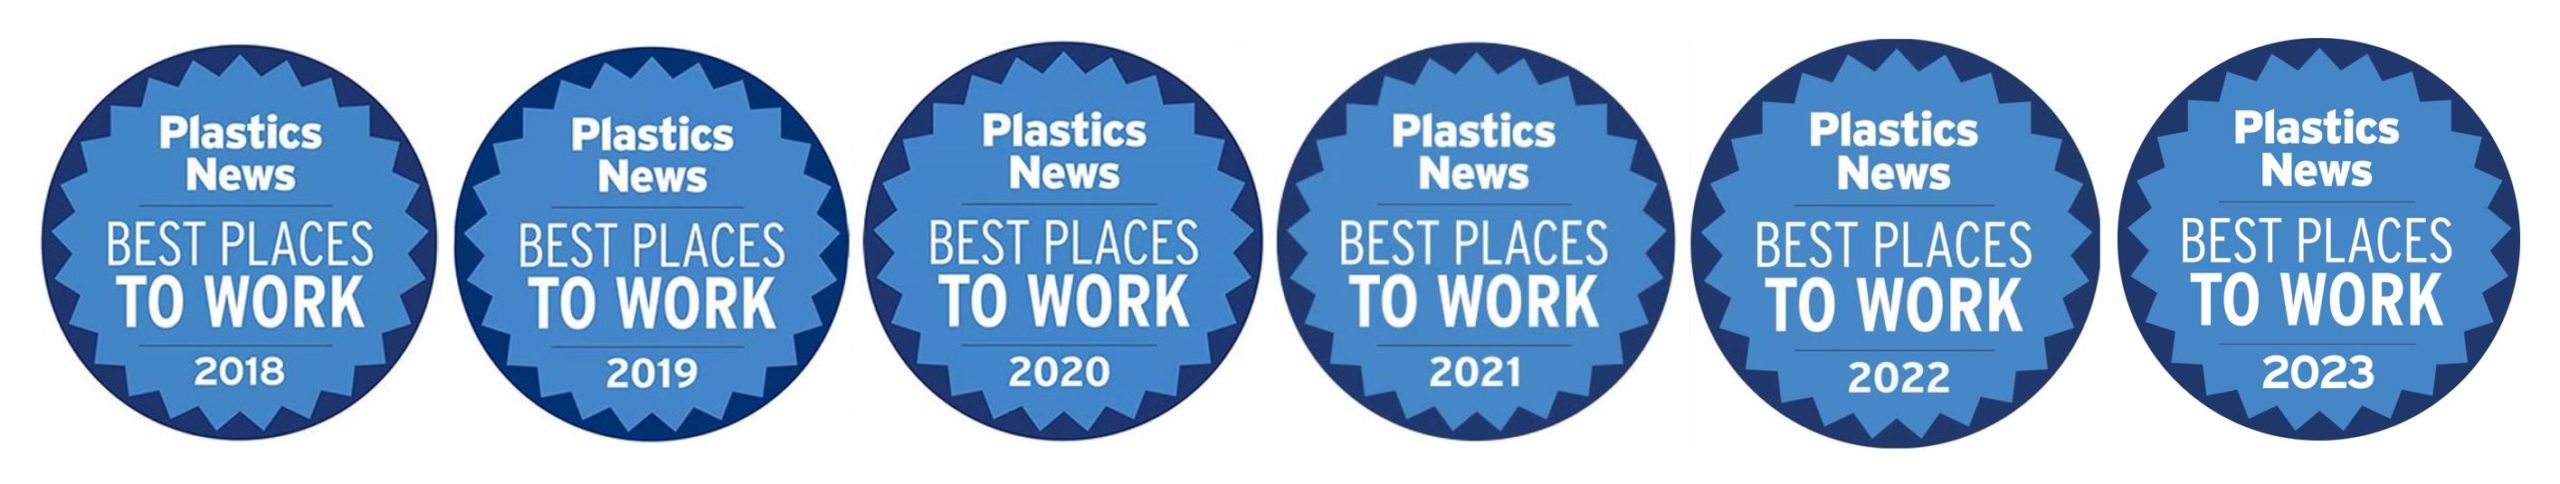 Plastics News Best Places to Work